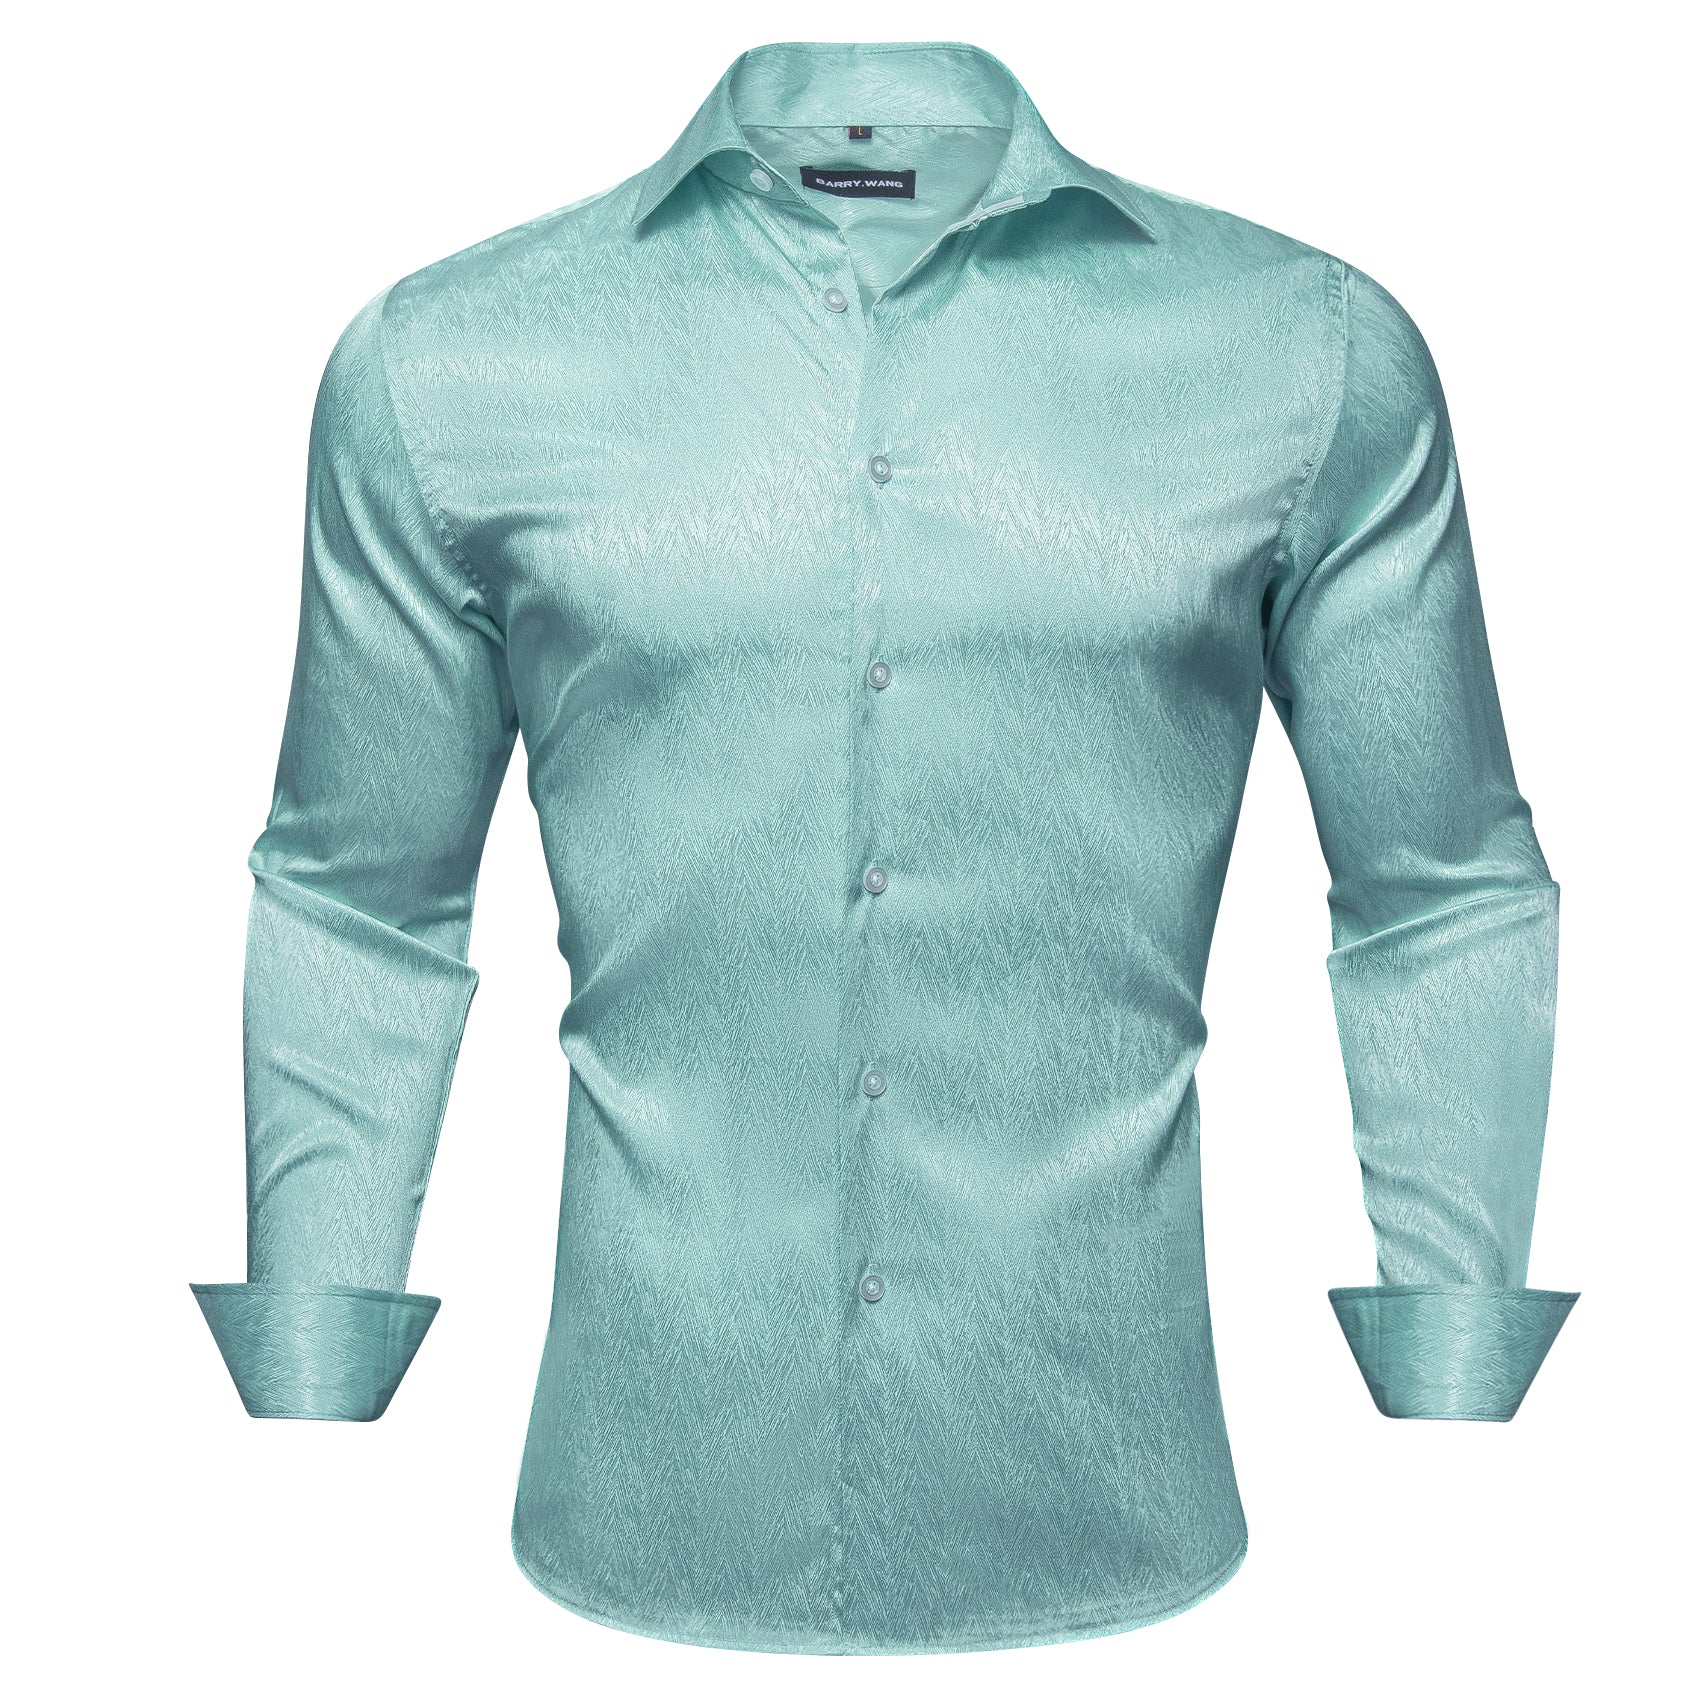 Barry.wang Pale Blue Solid Silk Shirt